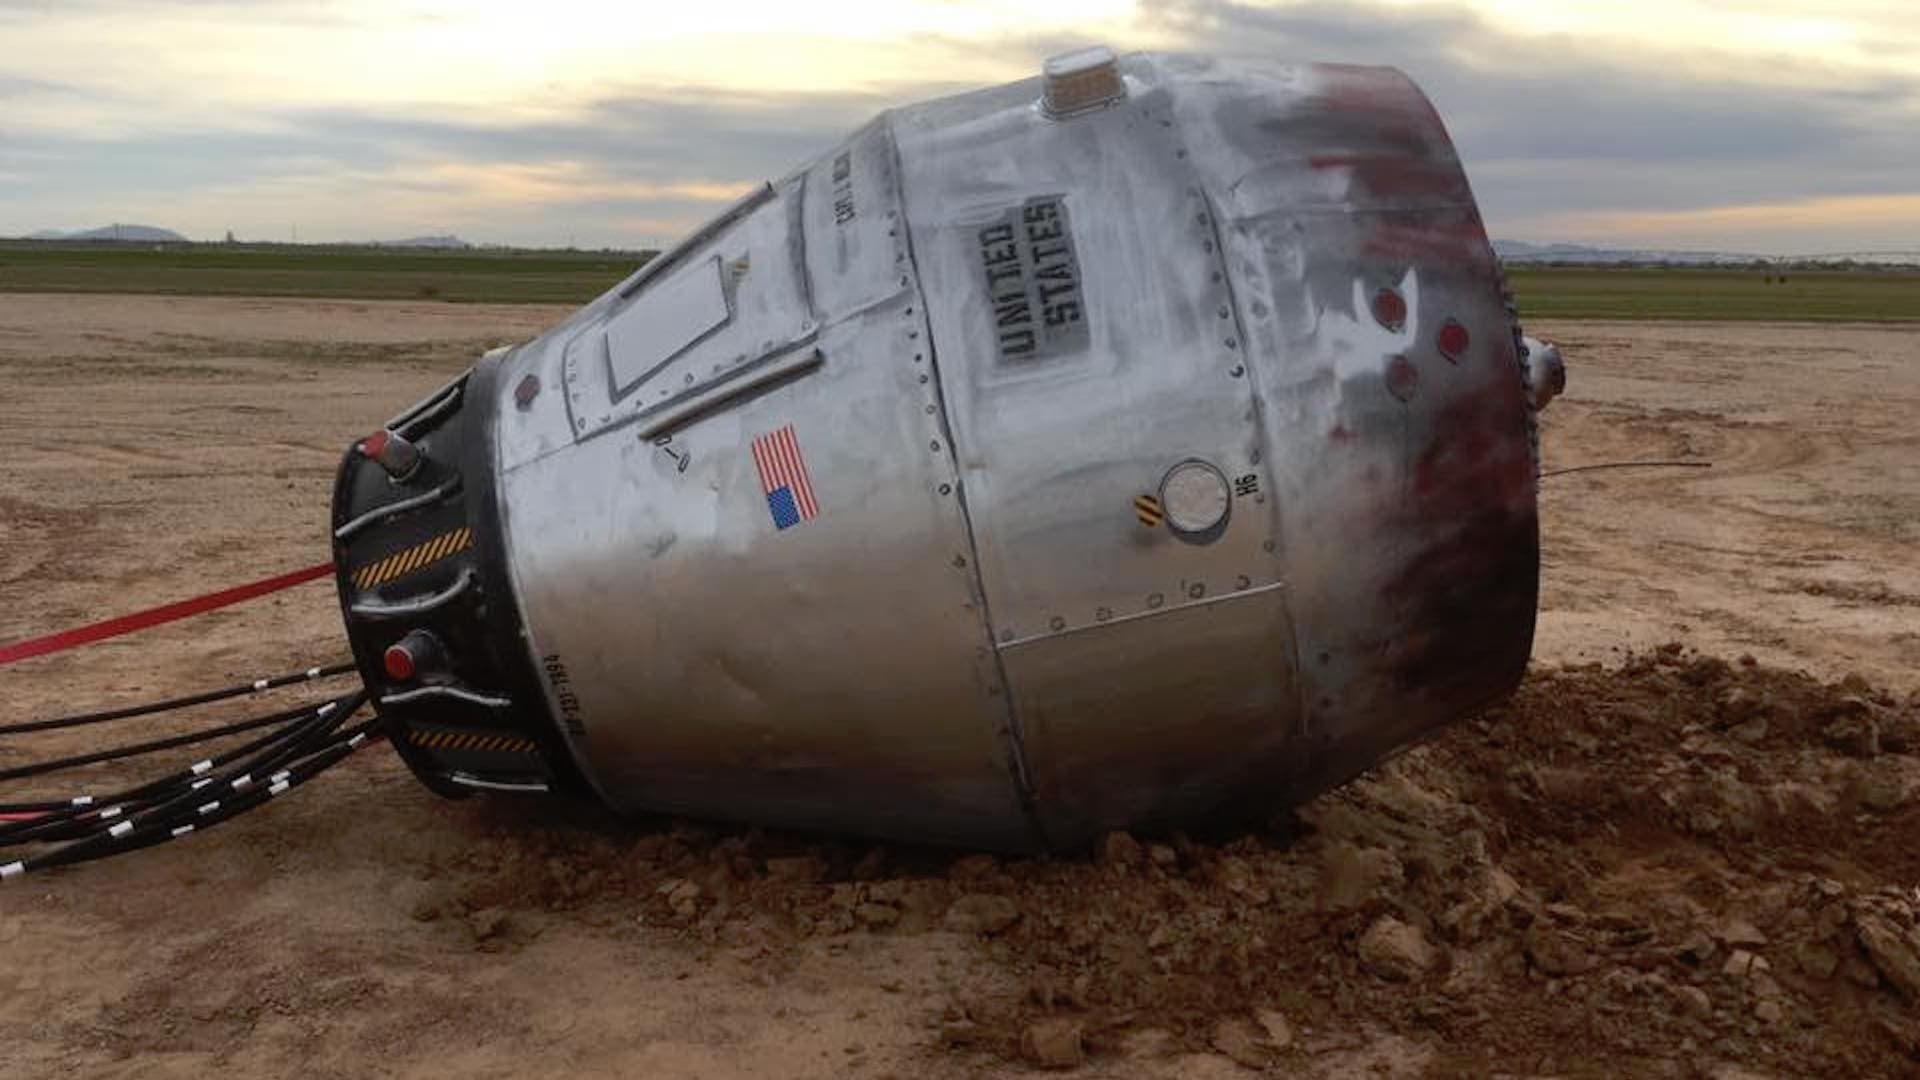 Artist Tricks Arizona Drivers With Fake NASA Space Capsule Crash